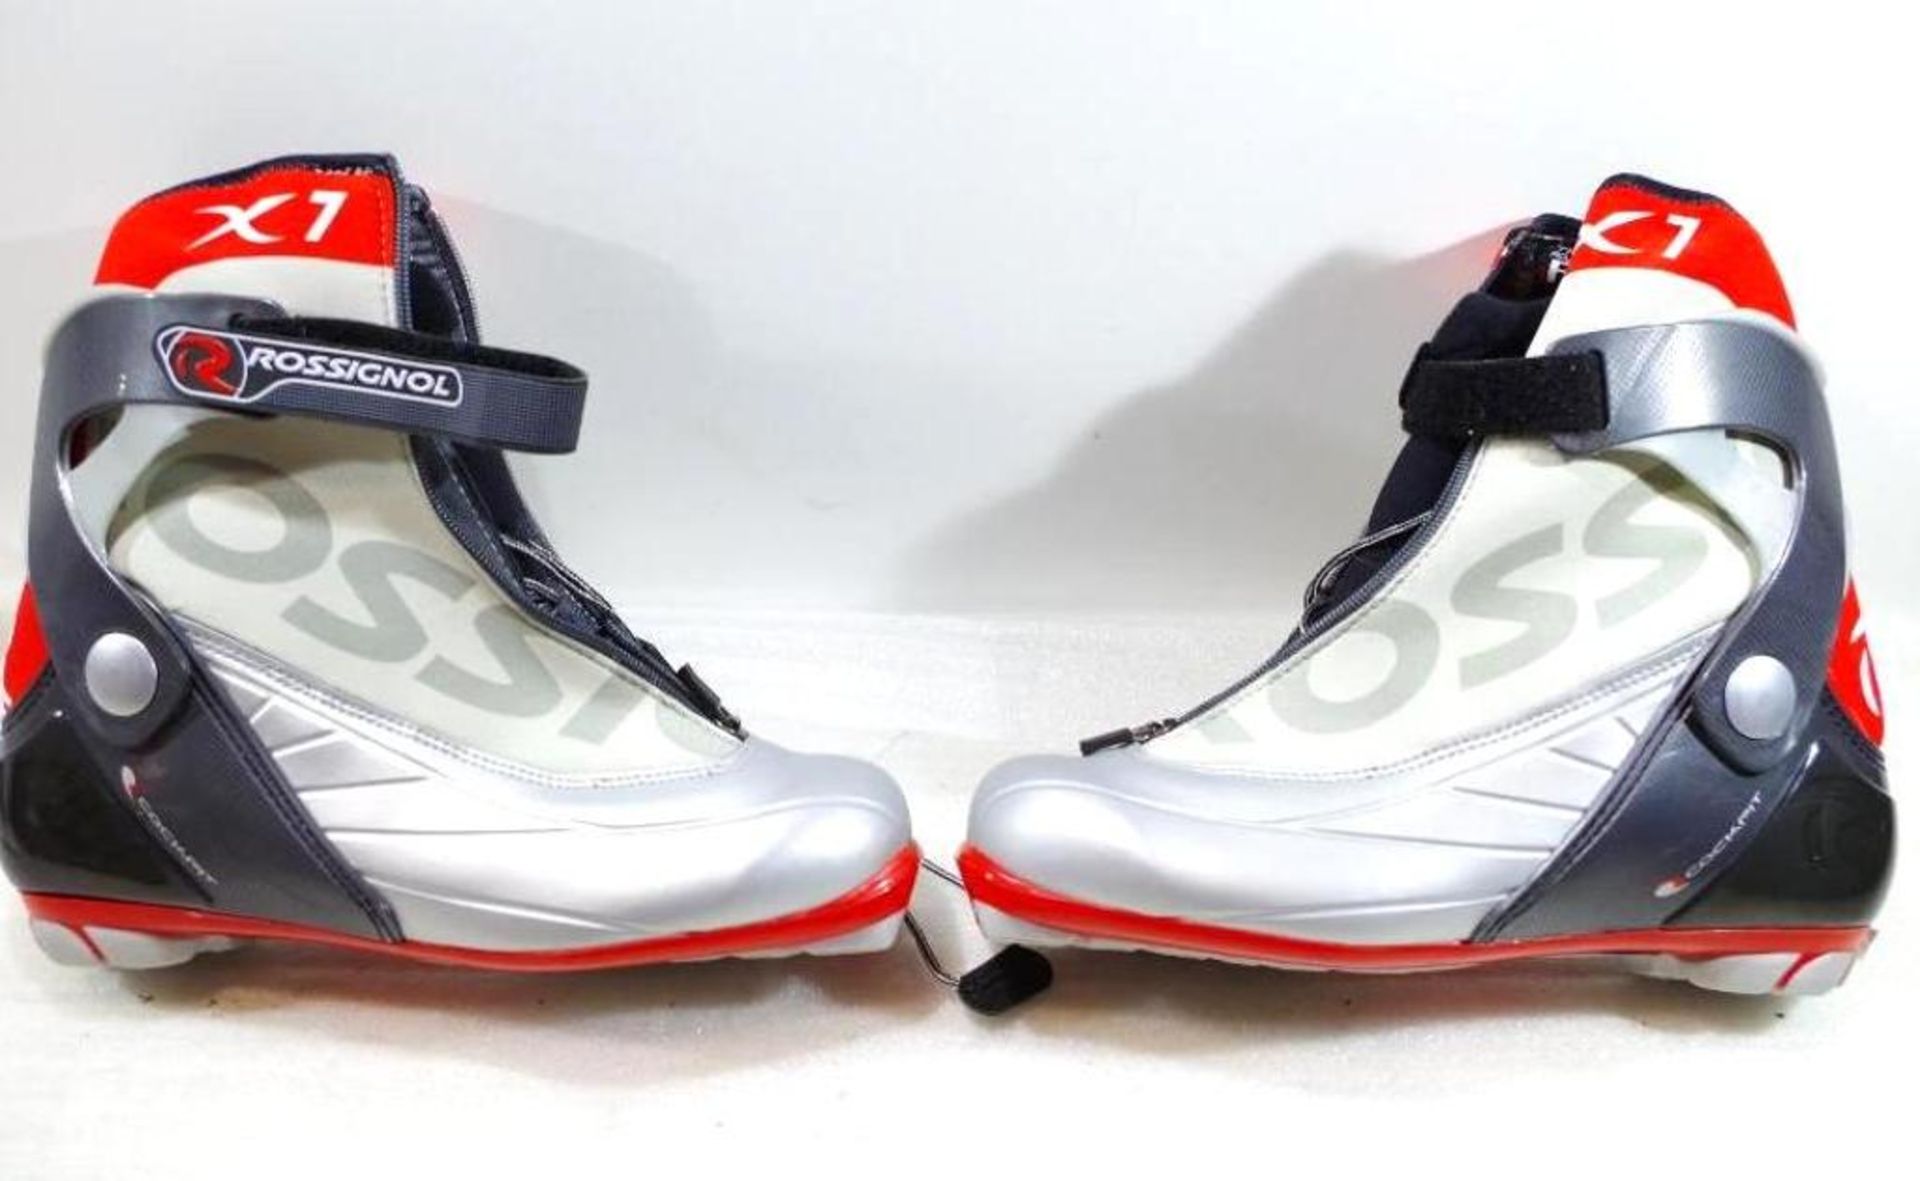 ROSSIGNOL Silver/Red X-7 Skate Boots, Size 42 EU M/N RI63500 (1 Pair)